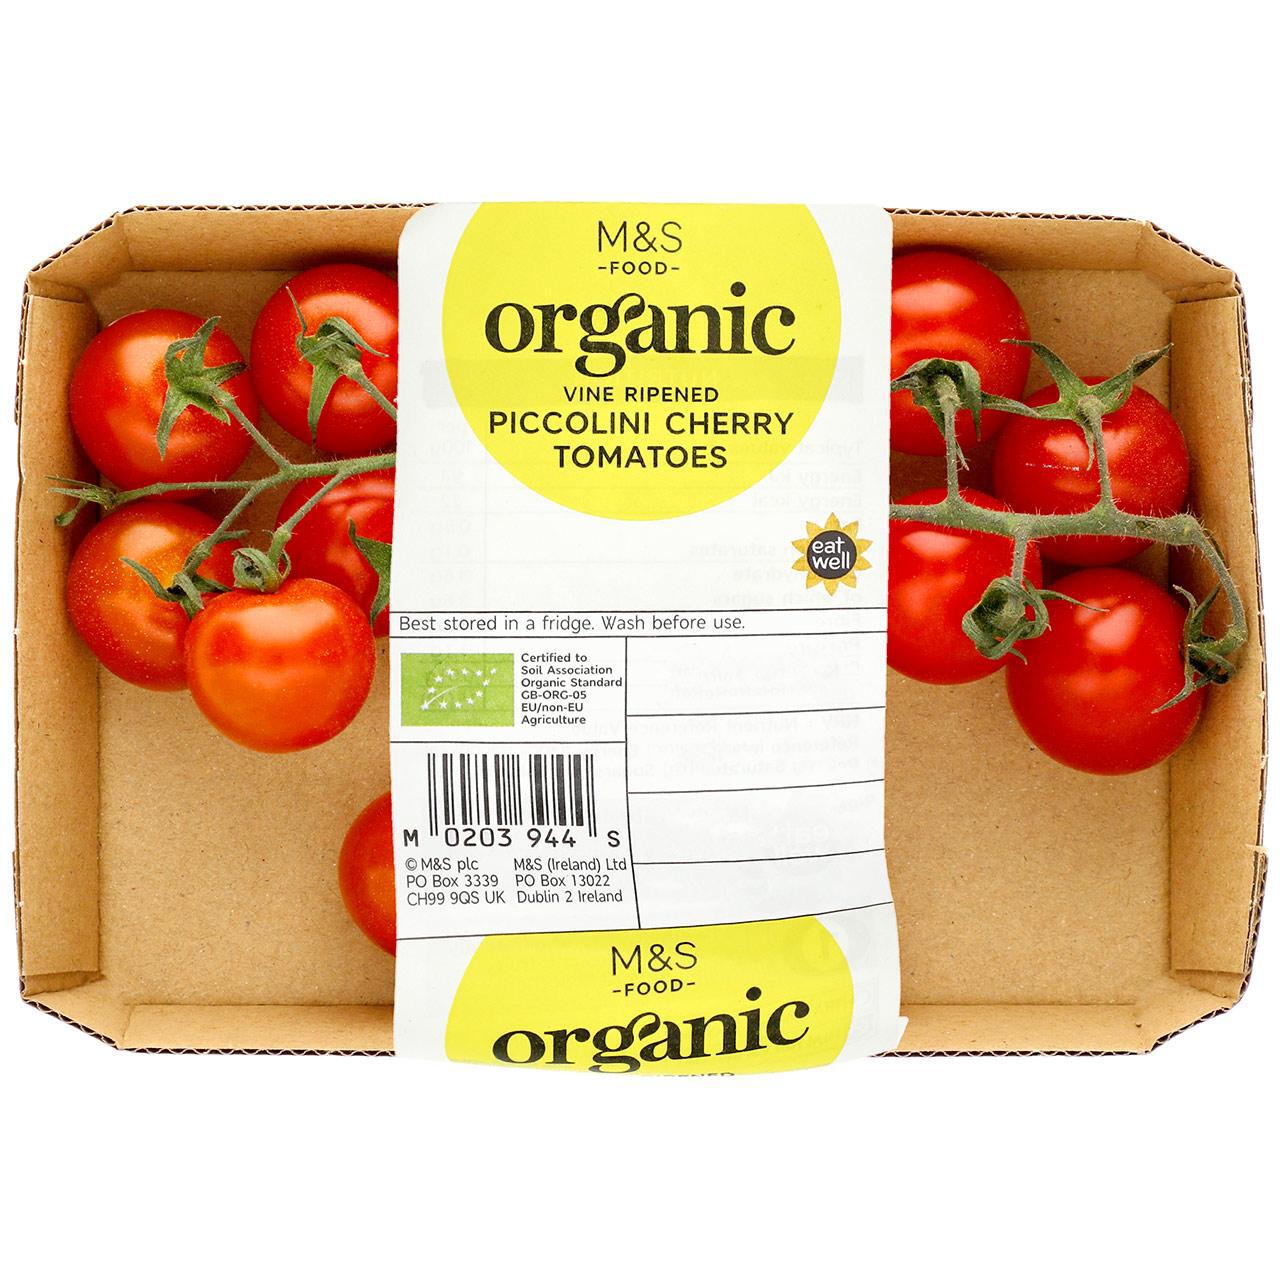 M&S Organic Piccolini Cherry Tomatoes Vine Ripened 200g